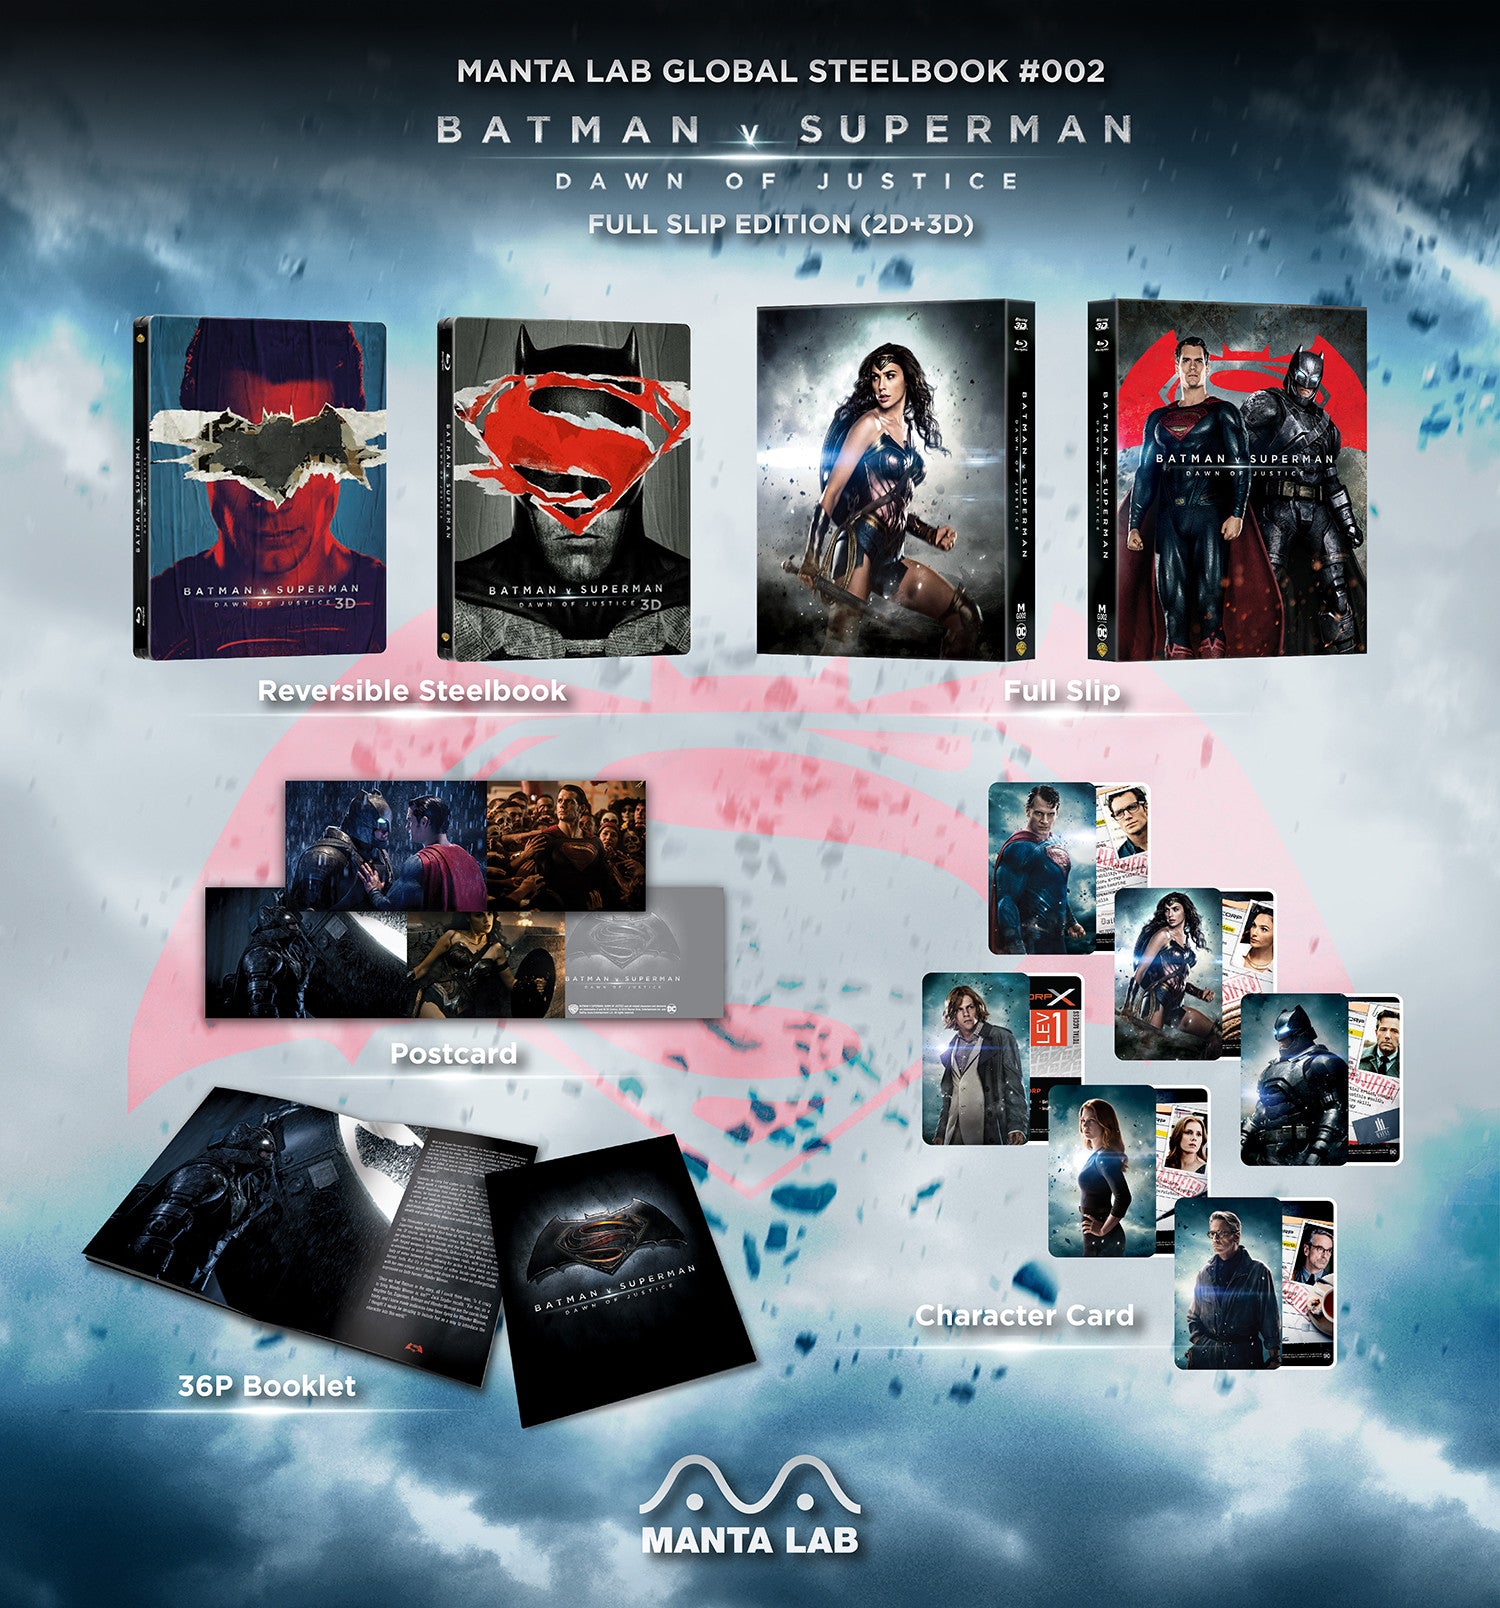 MG#2] BATMAN V SUPERMAN: DAWN OF JUSTICE STEELBOOK (FULL SLIP)(2D+3D) -  Manta Lab